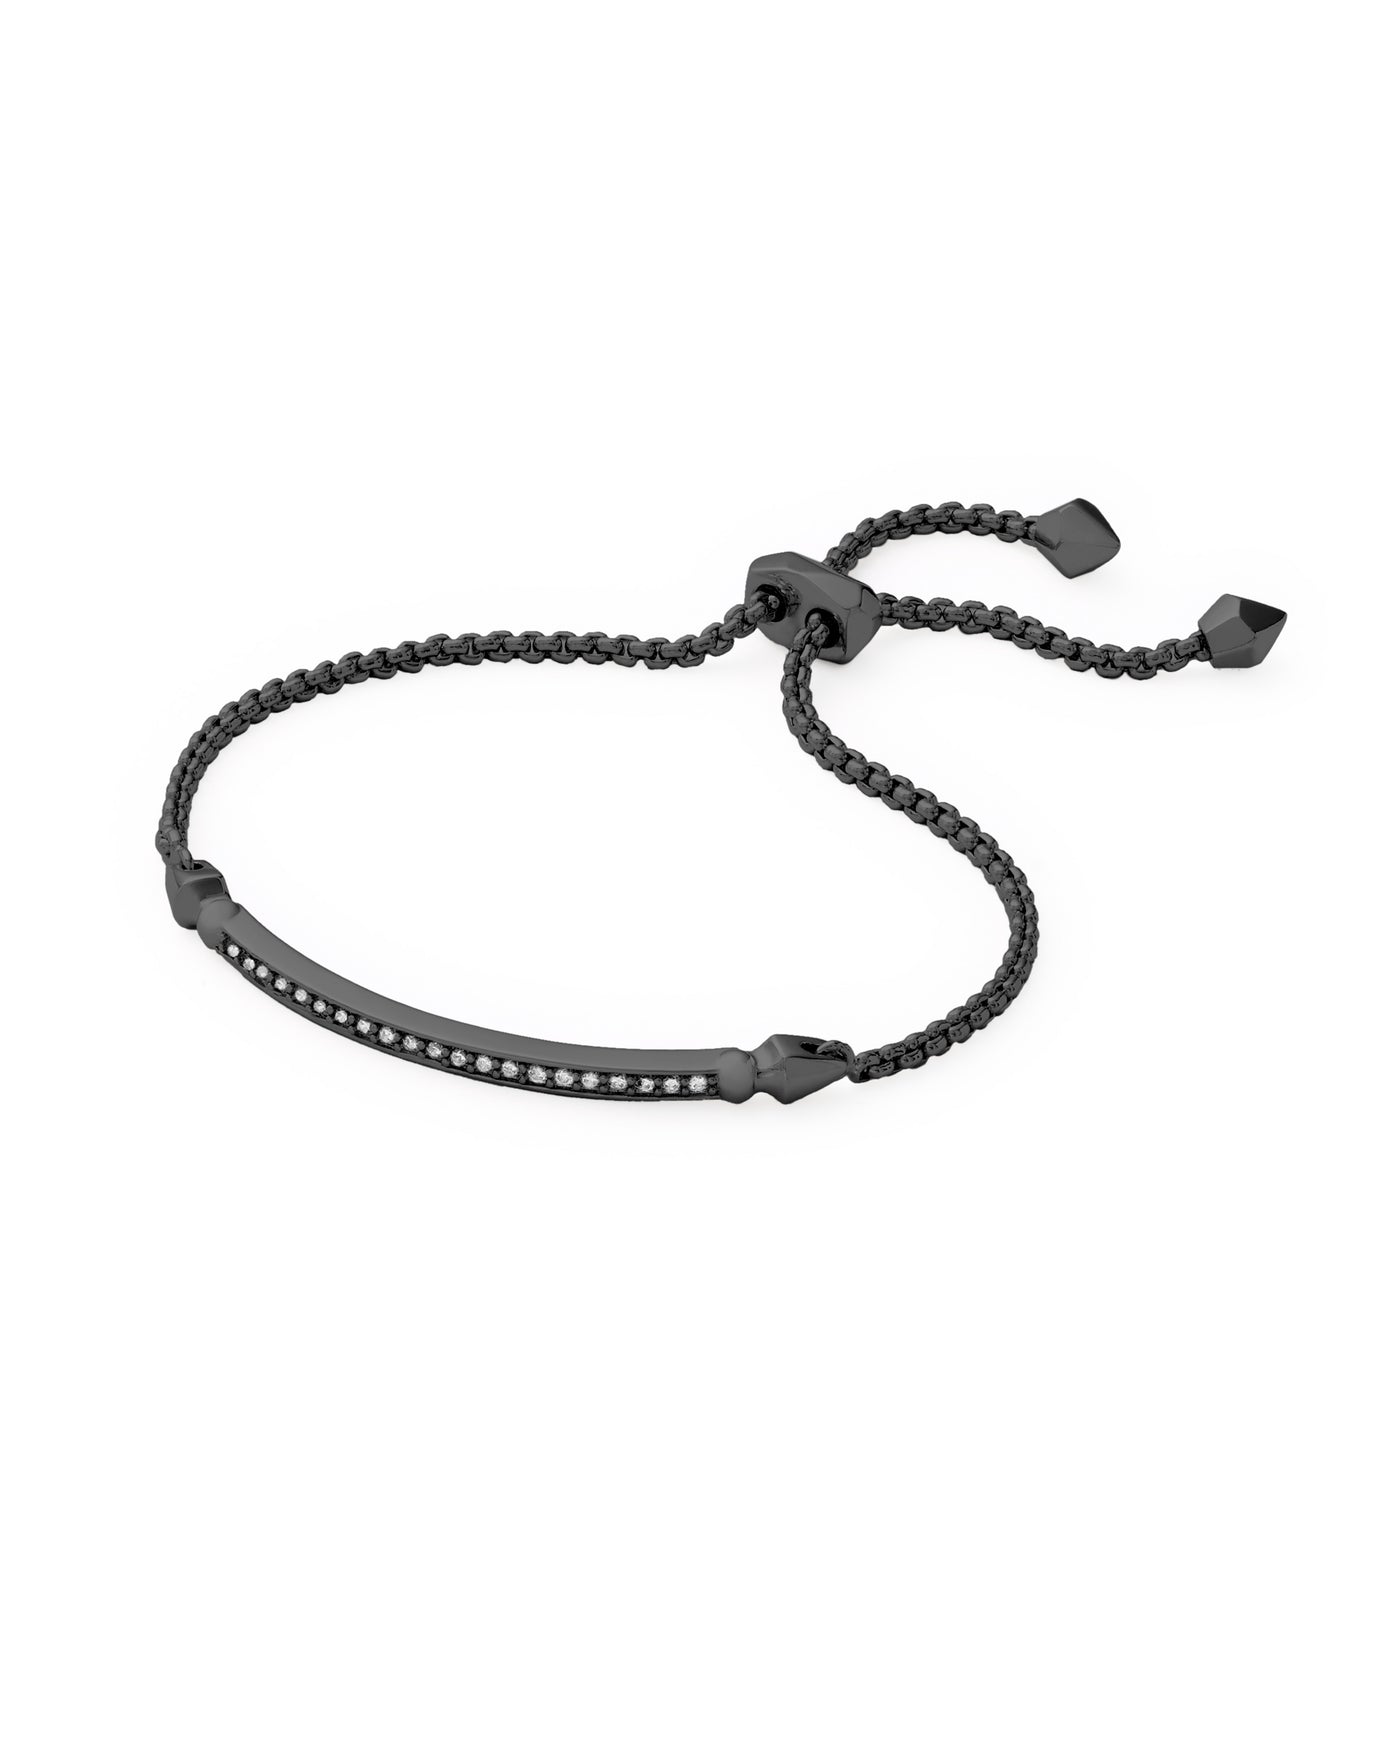 Kendra Scott Ott Adjustable Chain Bracelet in Gunmetal-Bracelets-Kendra Scott-Market Street Nest, Fashionable Clothing, Shoes and Home Décor Located in Mabank, TX